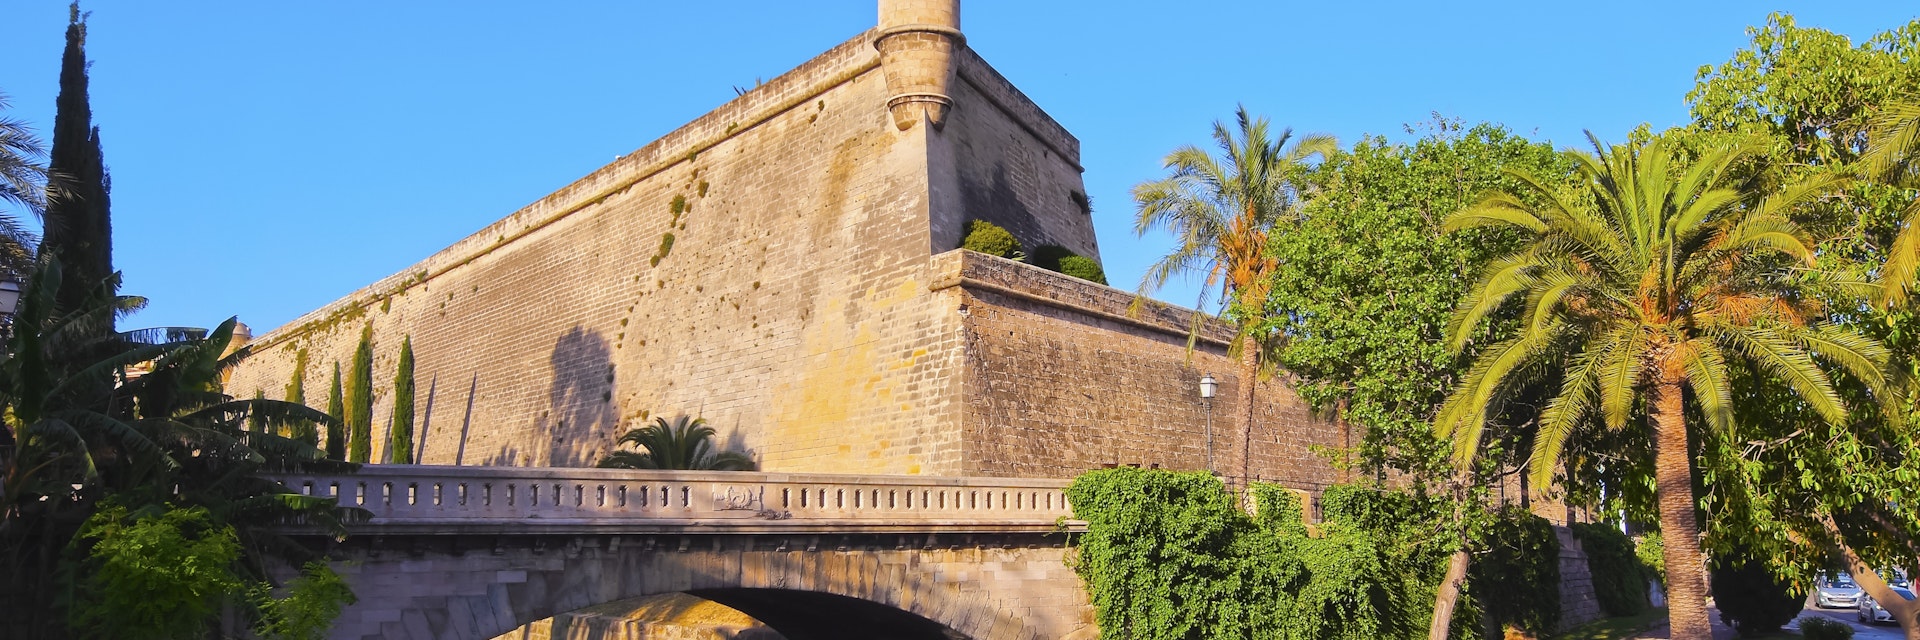 Spain, Balearic Islands, Palma de Mallorca, View of walls of Es Baluard